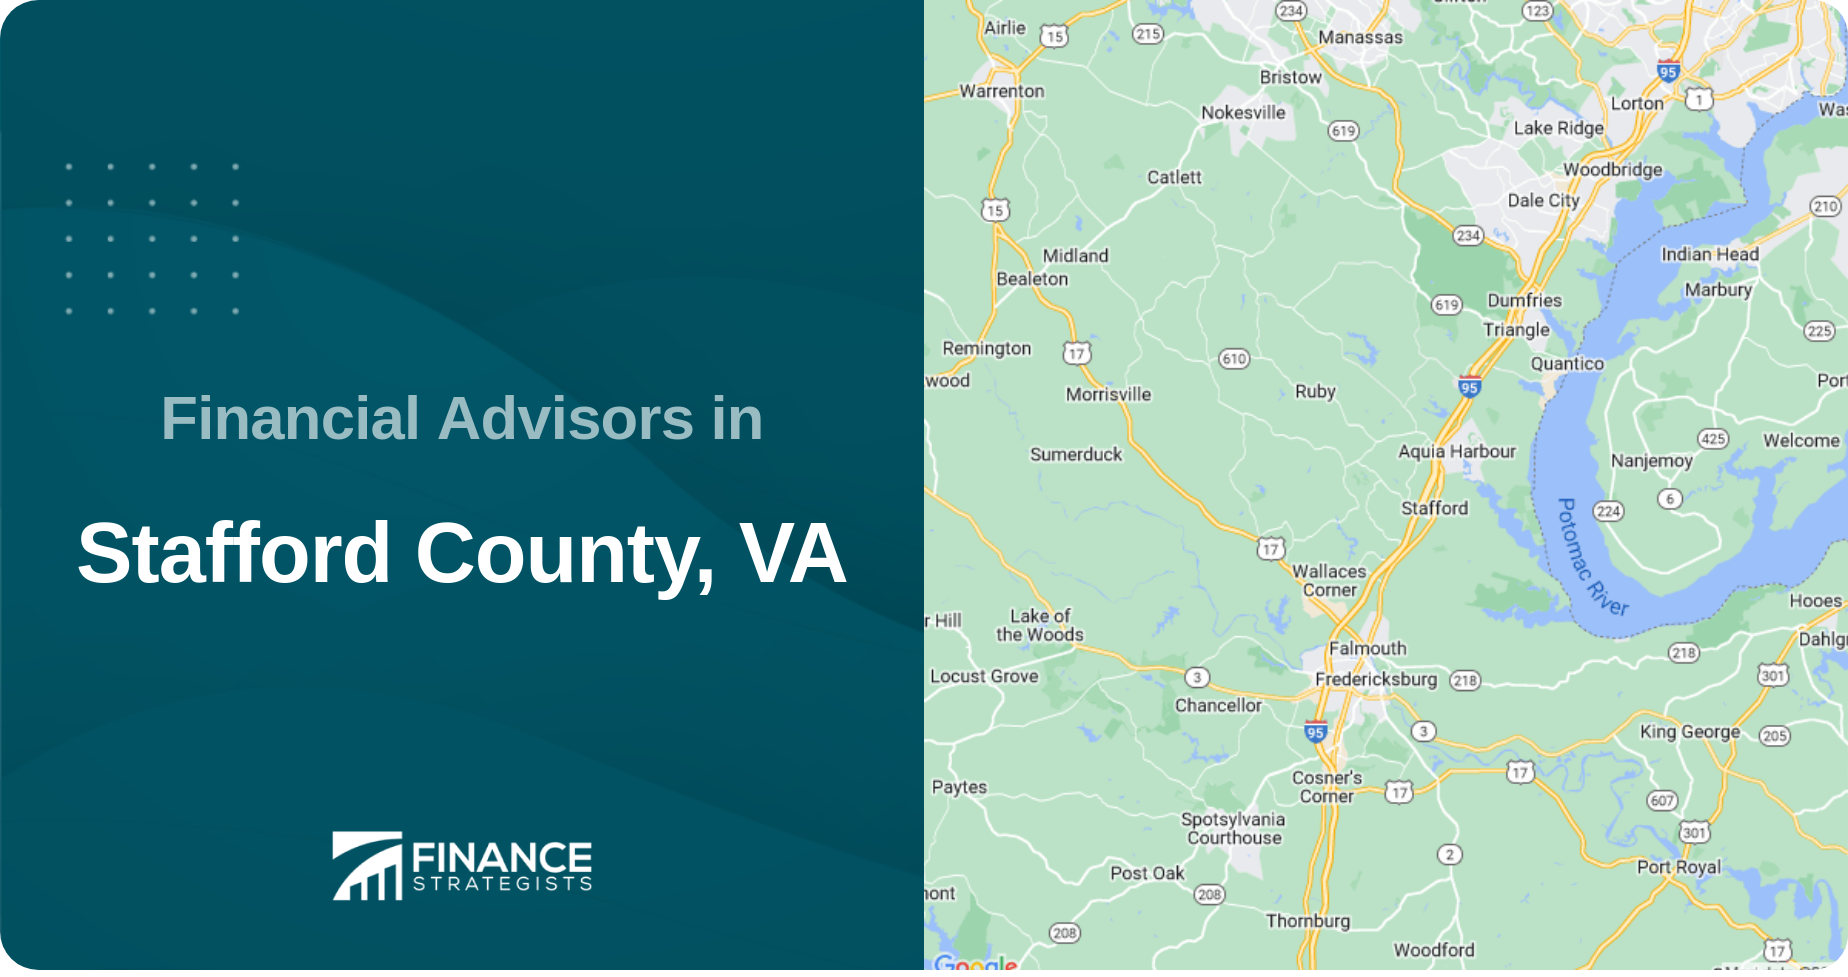 Financial Advisors in Stafford County, VA